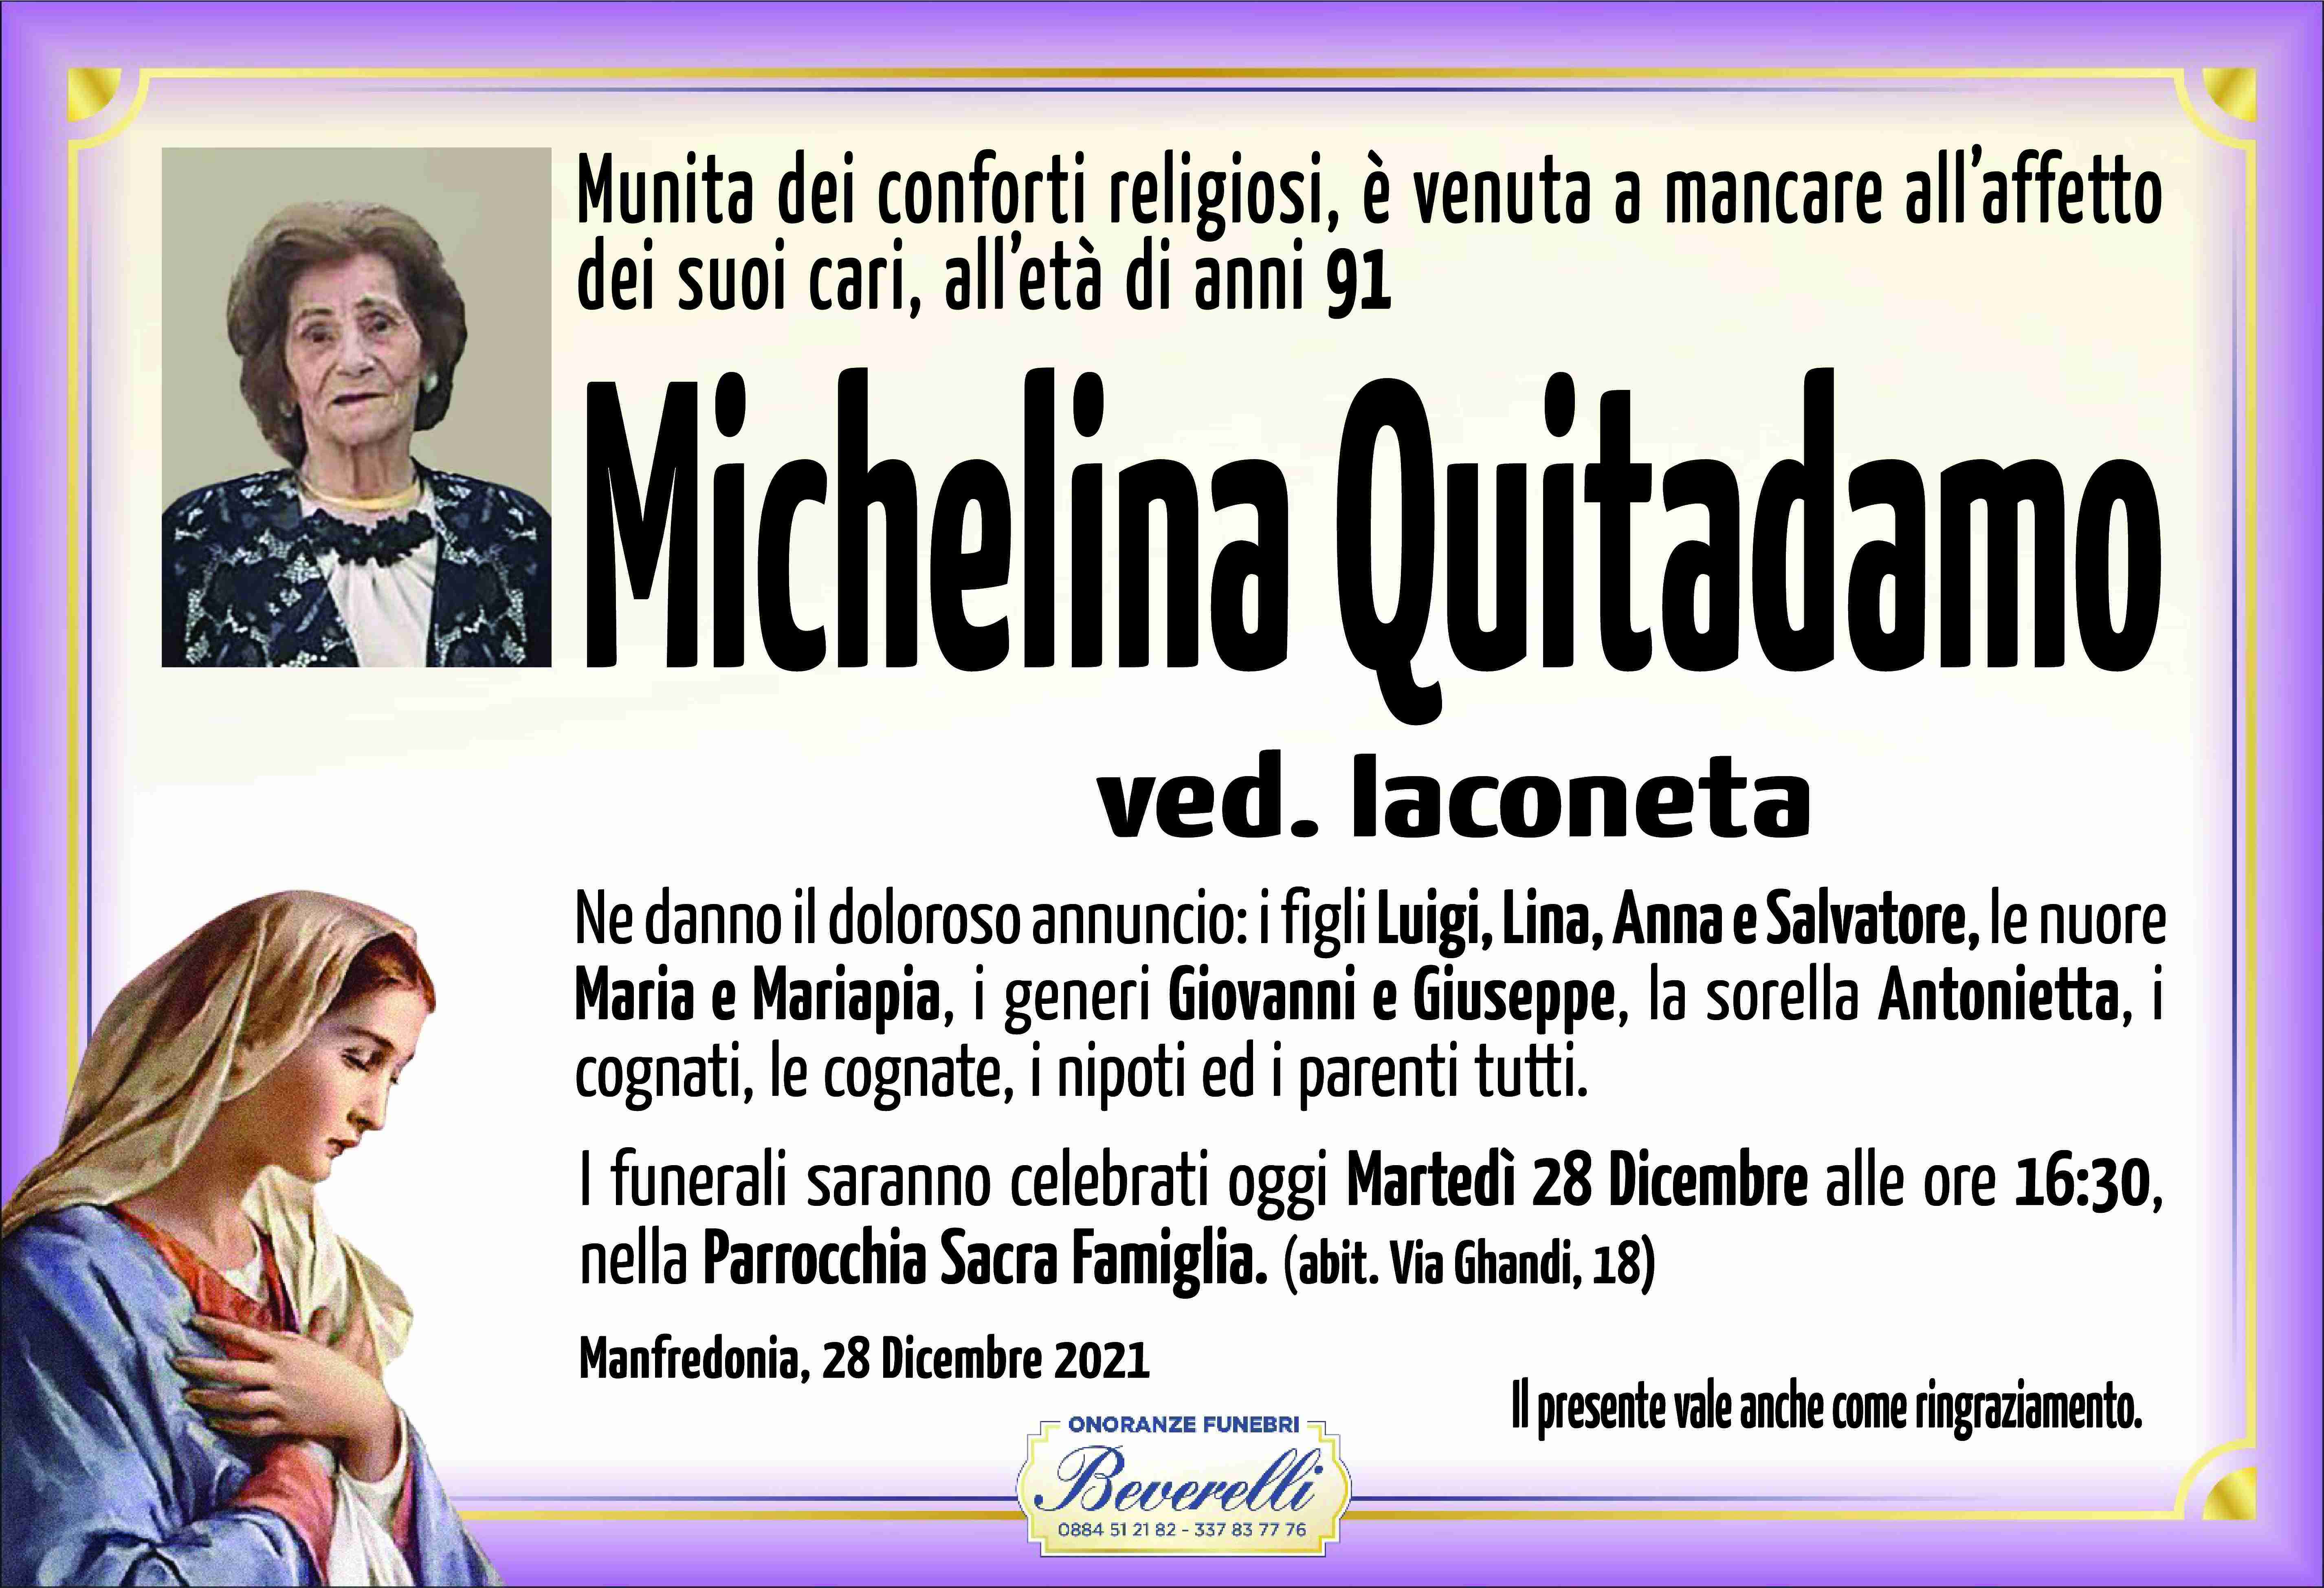 Michelina Quitadamo